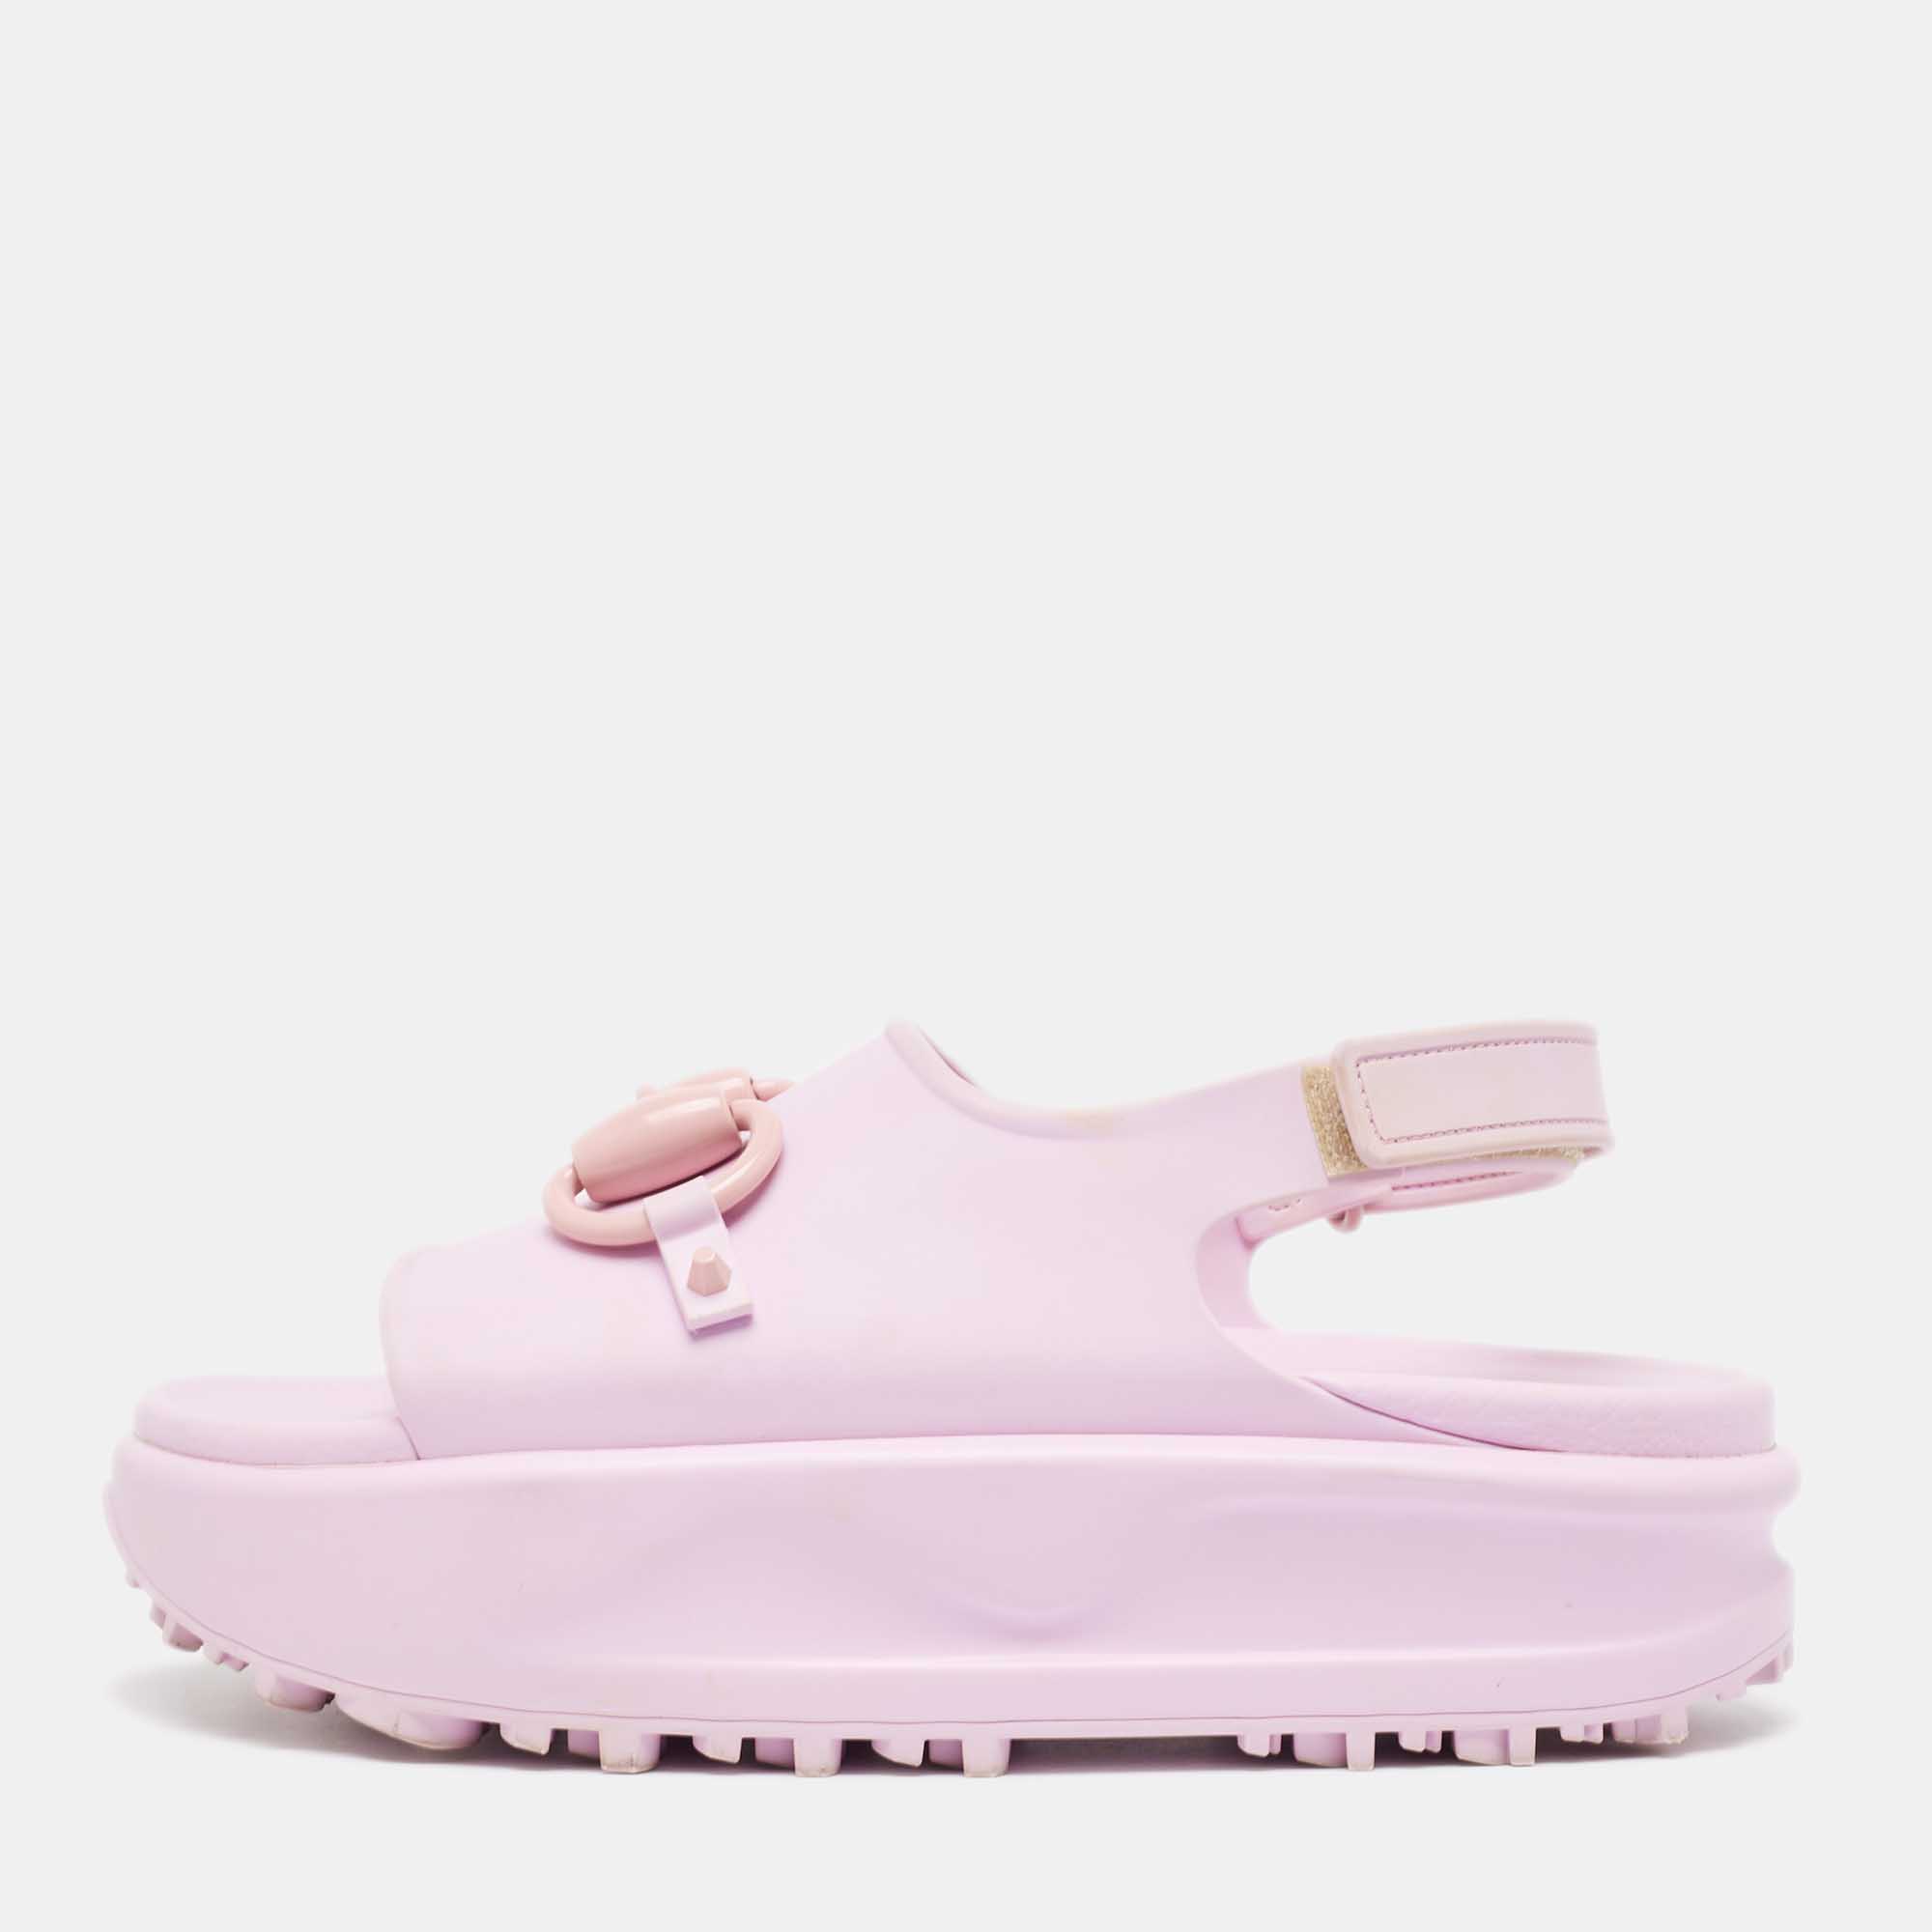 Gucci purple rubber slingback sandals size 38